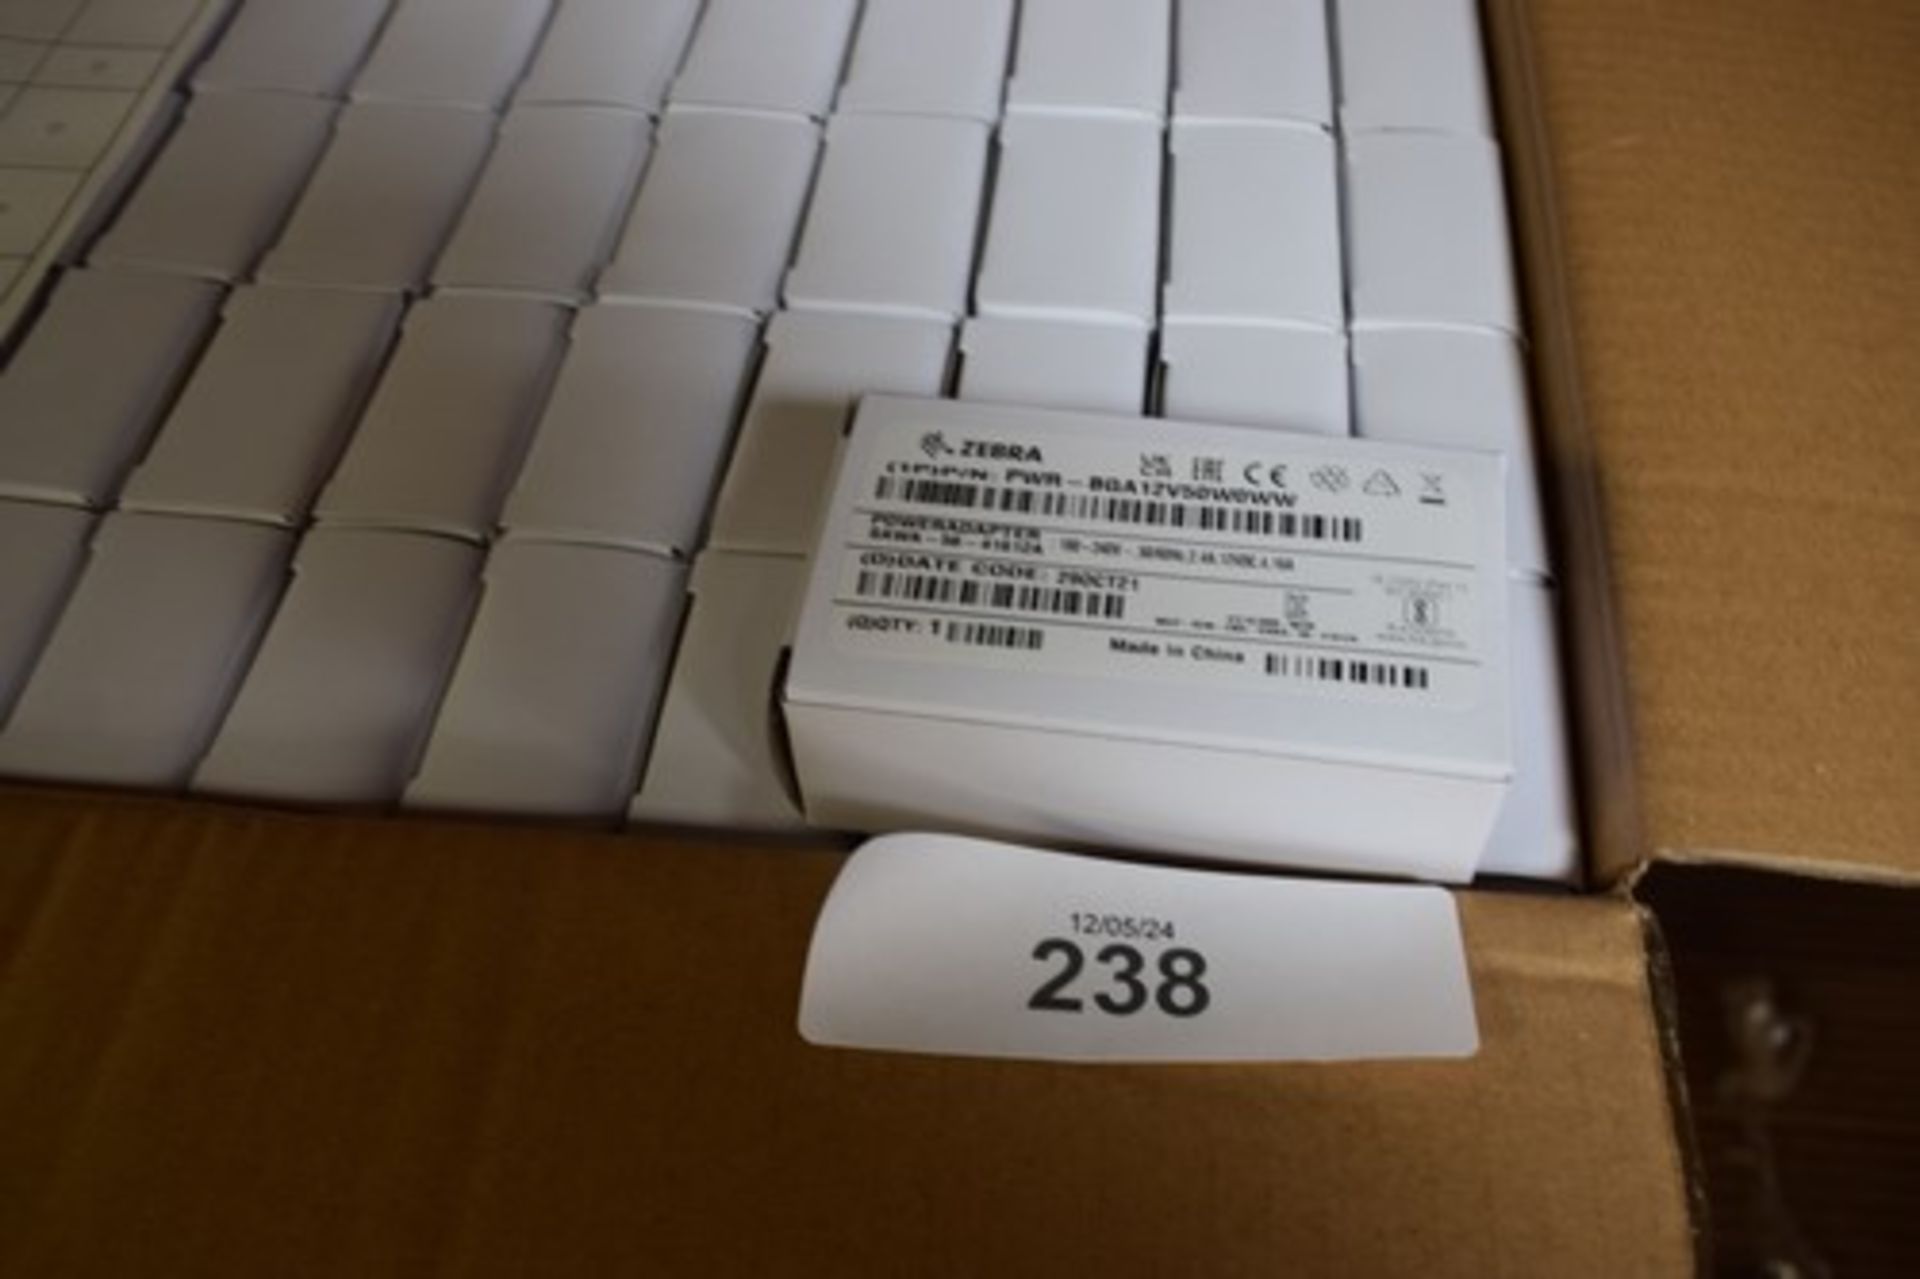 50 x Zebra printer adapters, Model PWR.BGA12V50WOWW - New in box (ES14)